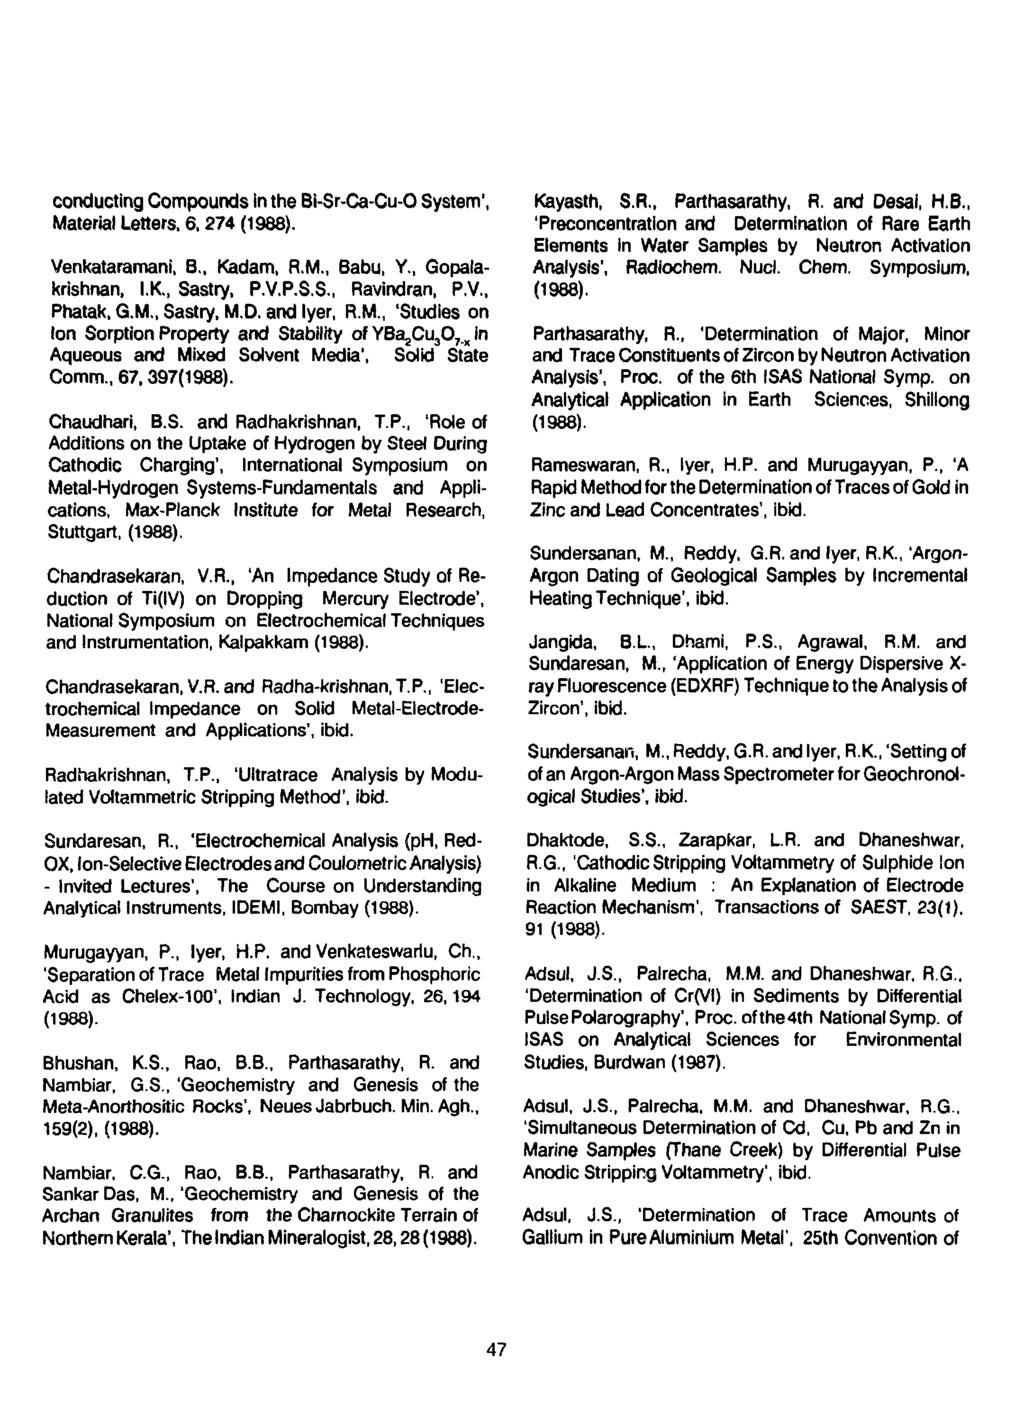 conducting Compounds in the Bi-Sr-Ca-Cu-Q System', Material Letters, 6.274 Venkataramani, B., Kadam, R.M., Babu, Y., Gopalakrishnan, I.K., Sastry, P.V.P.S.S., Ravindran, P.V., Phatak, G.M., Sastry, M.